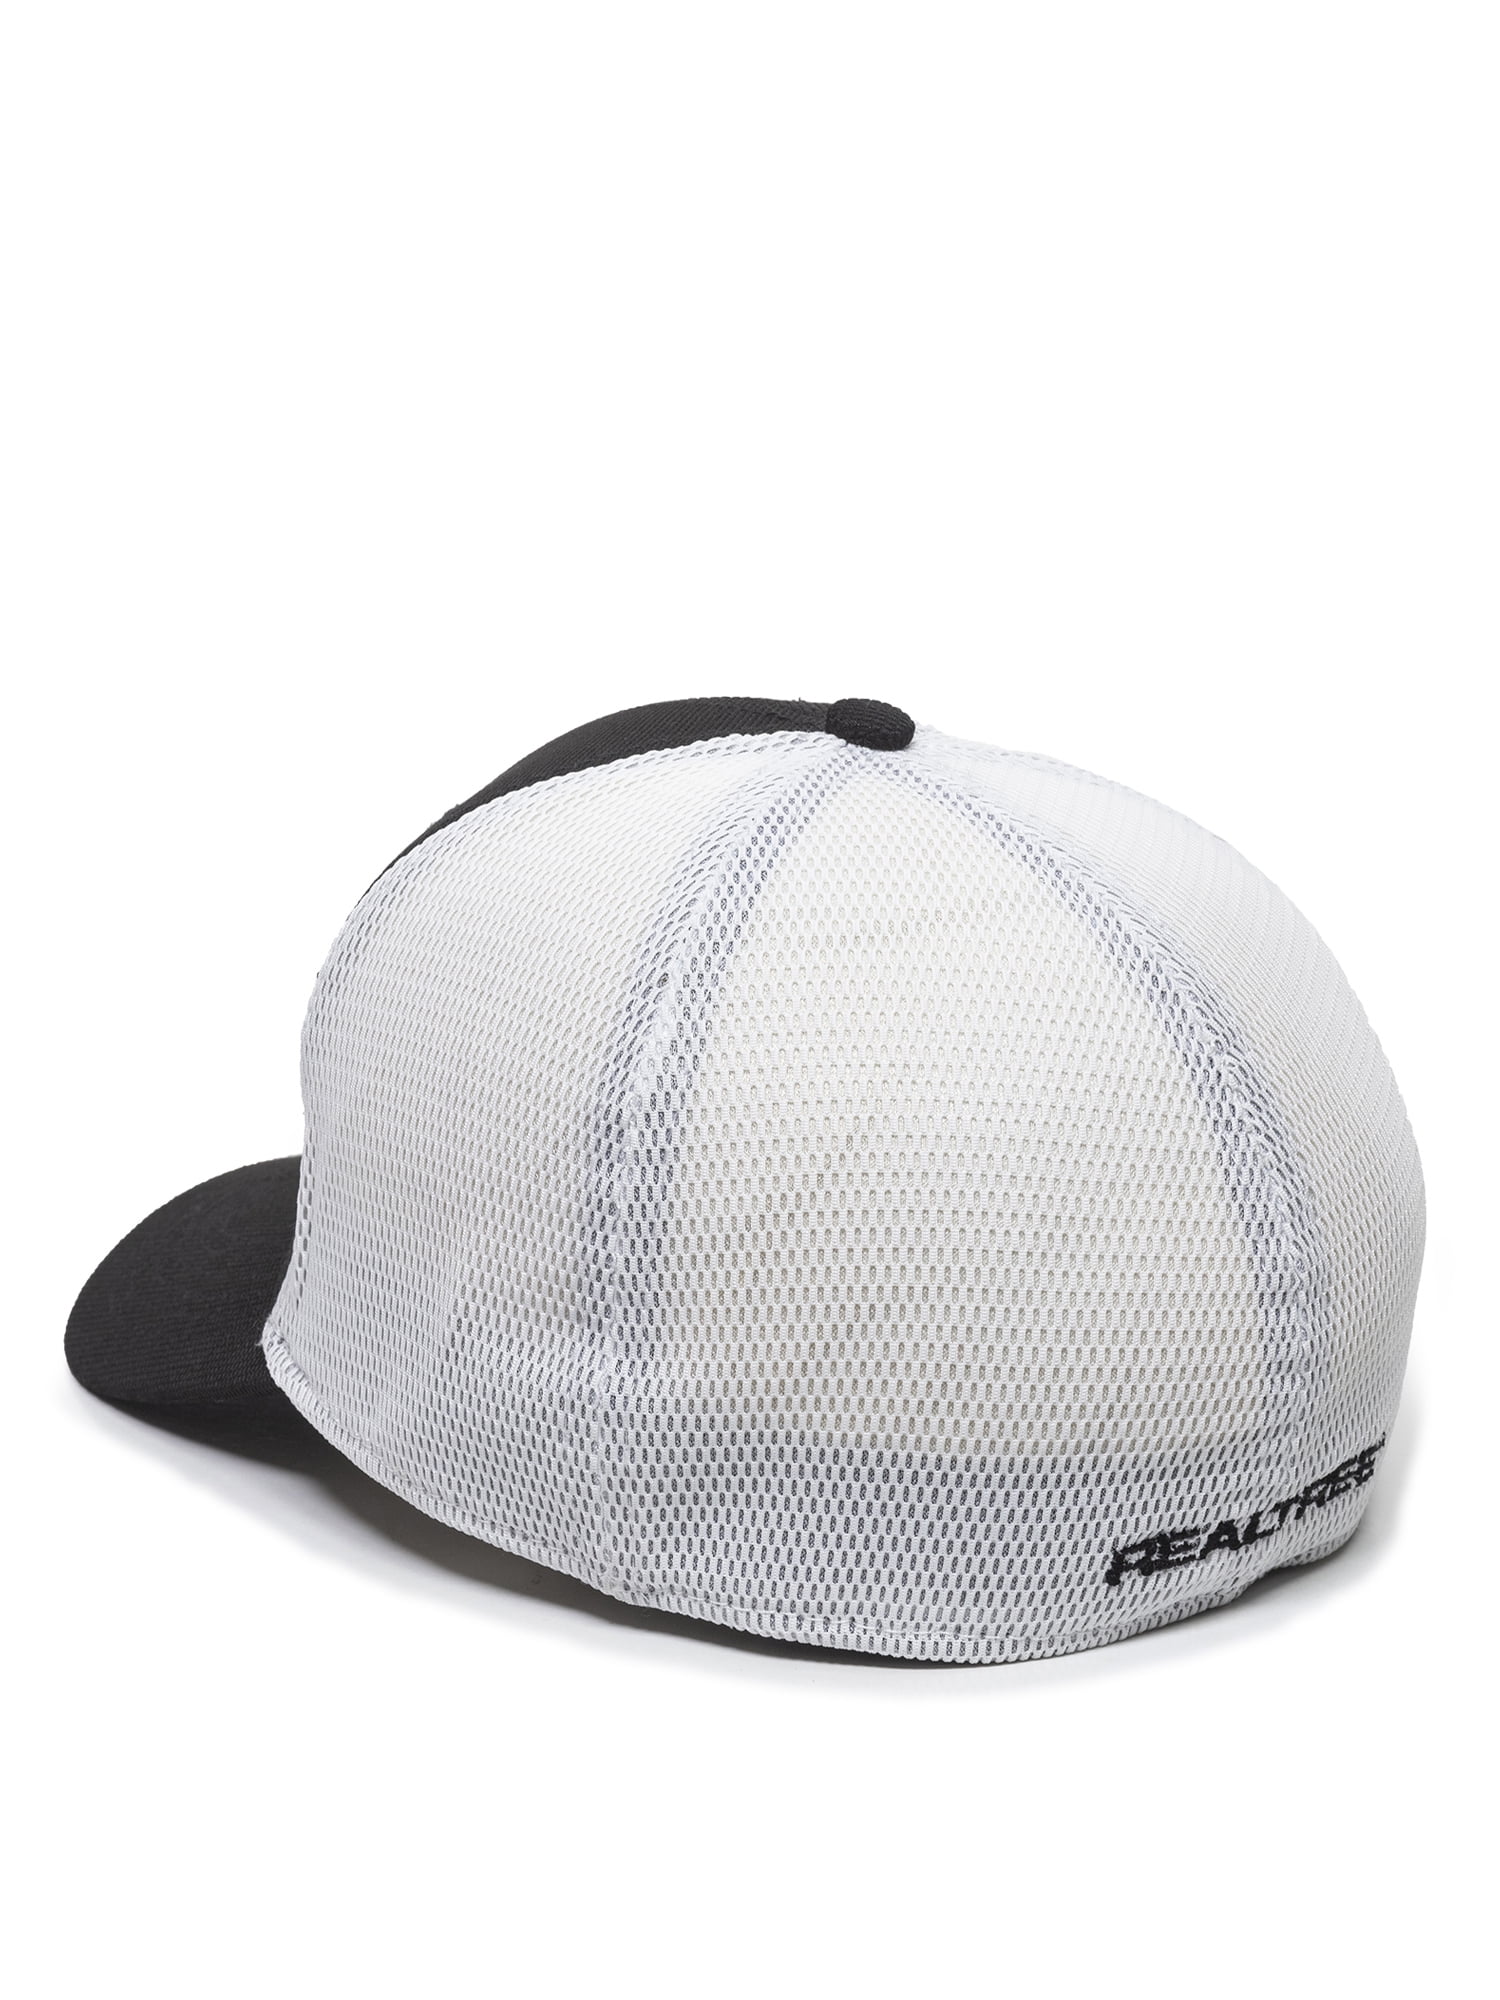 Realtree Hunting Structured Baseball Style Hat, Black/White, Large/Extra  Large